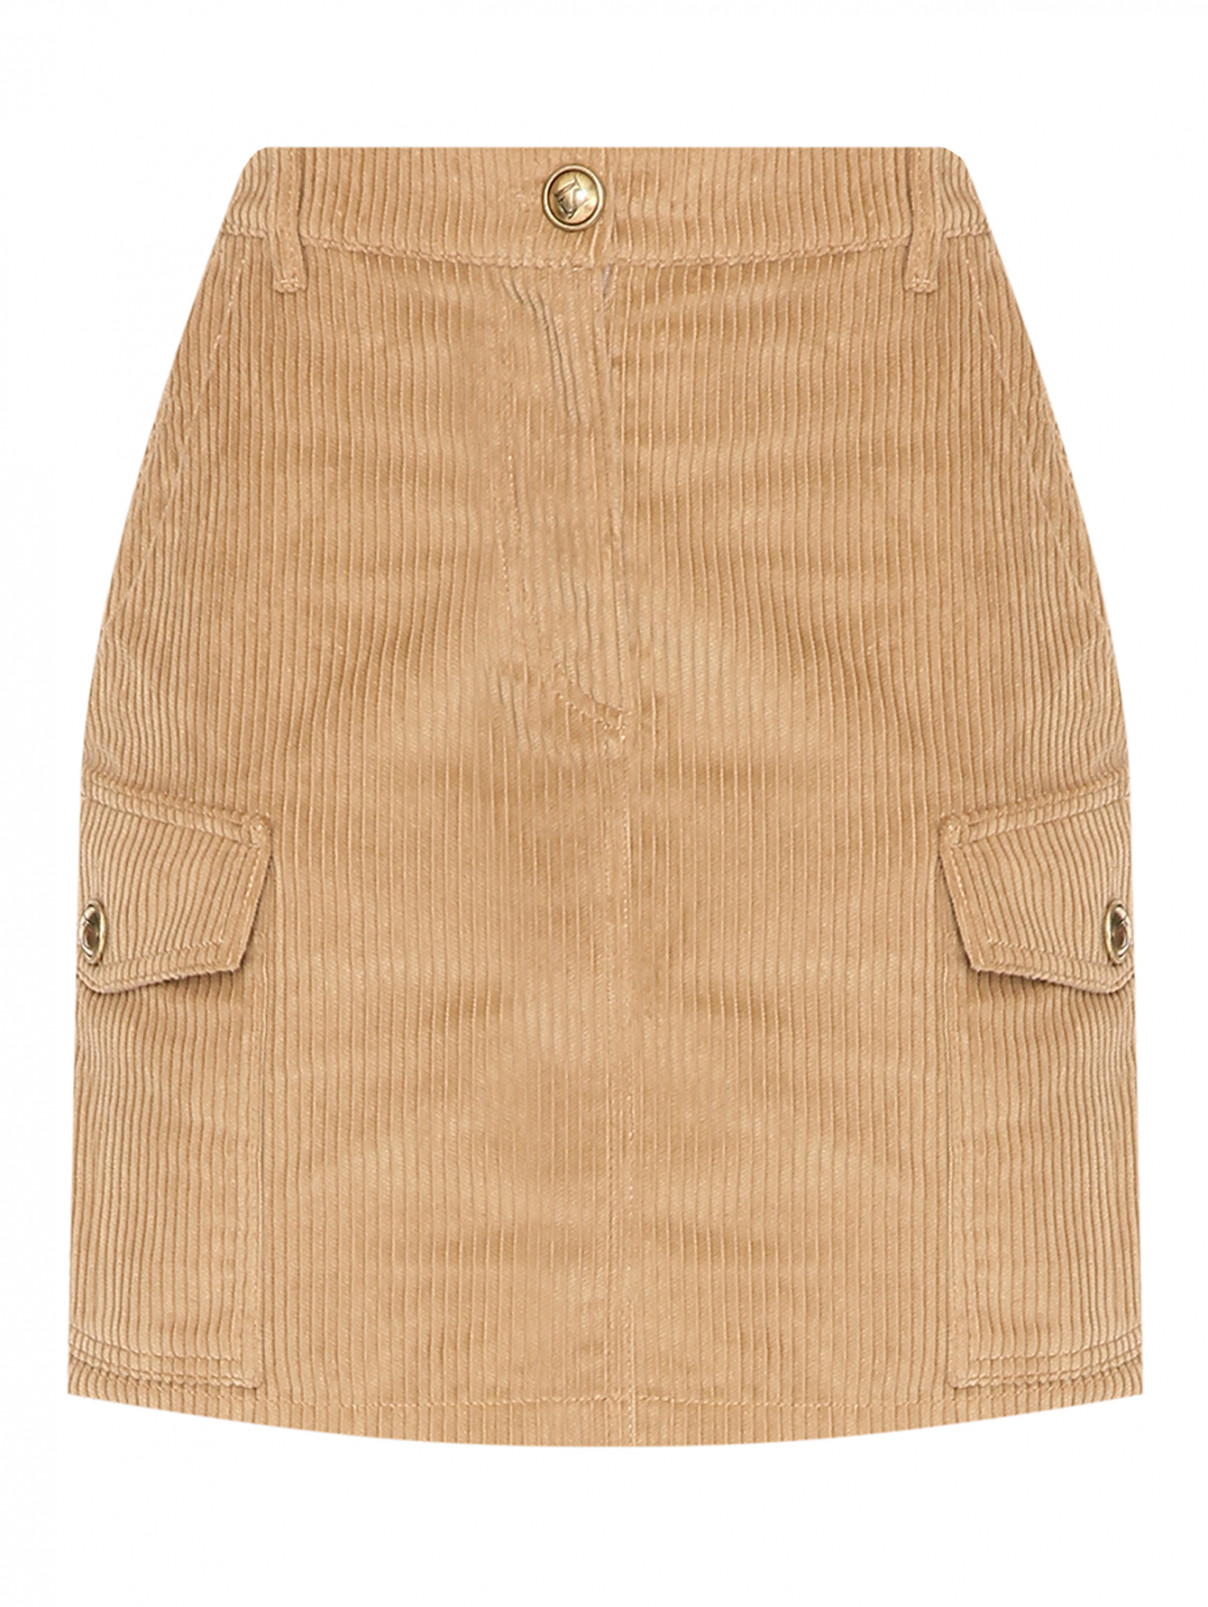 Юбка-мини с карманами Luisa Spagnoli  –  Общий вид  – Цвет:  Бежевый